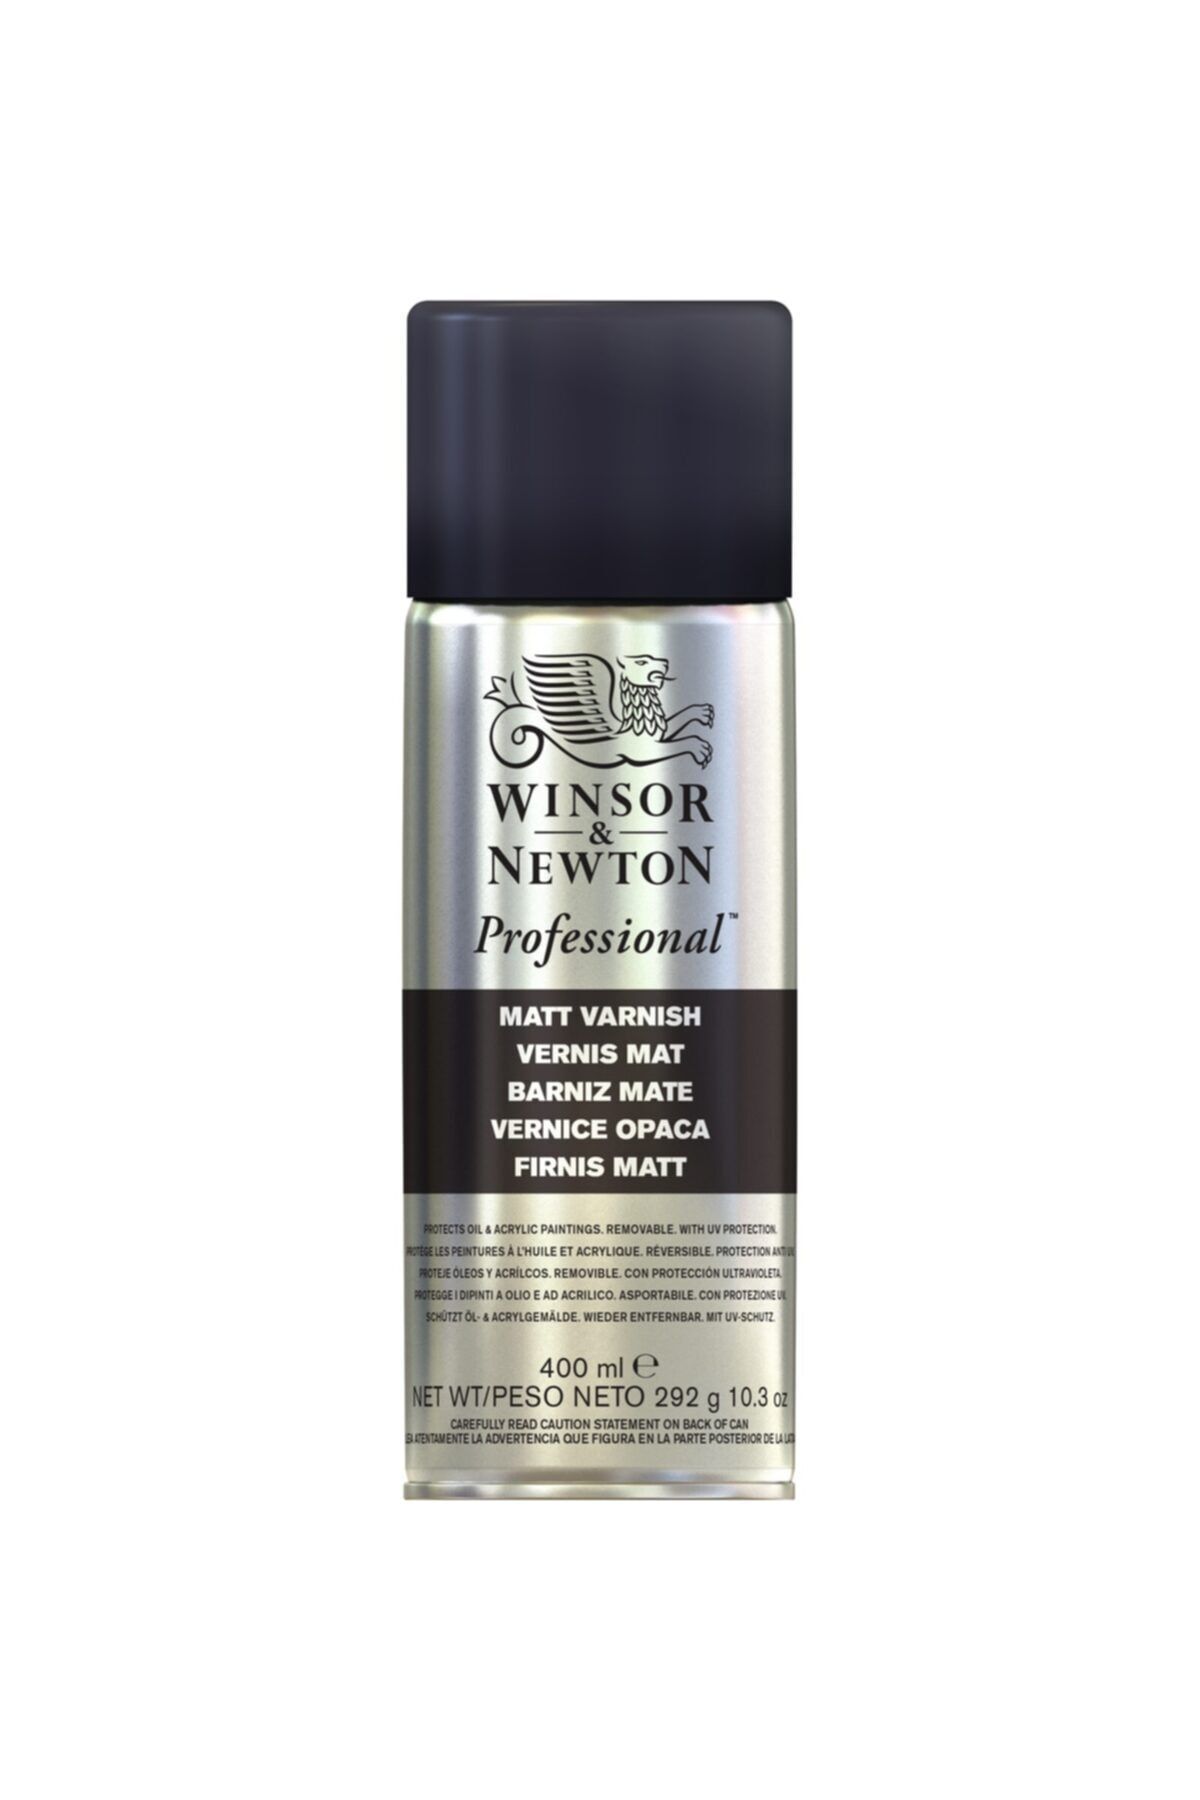 Winsor Newton Winsor & Newton Professional Matt Varnish Mat Resim Verniği 400 ml.